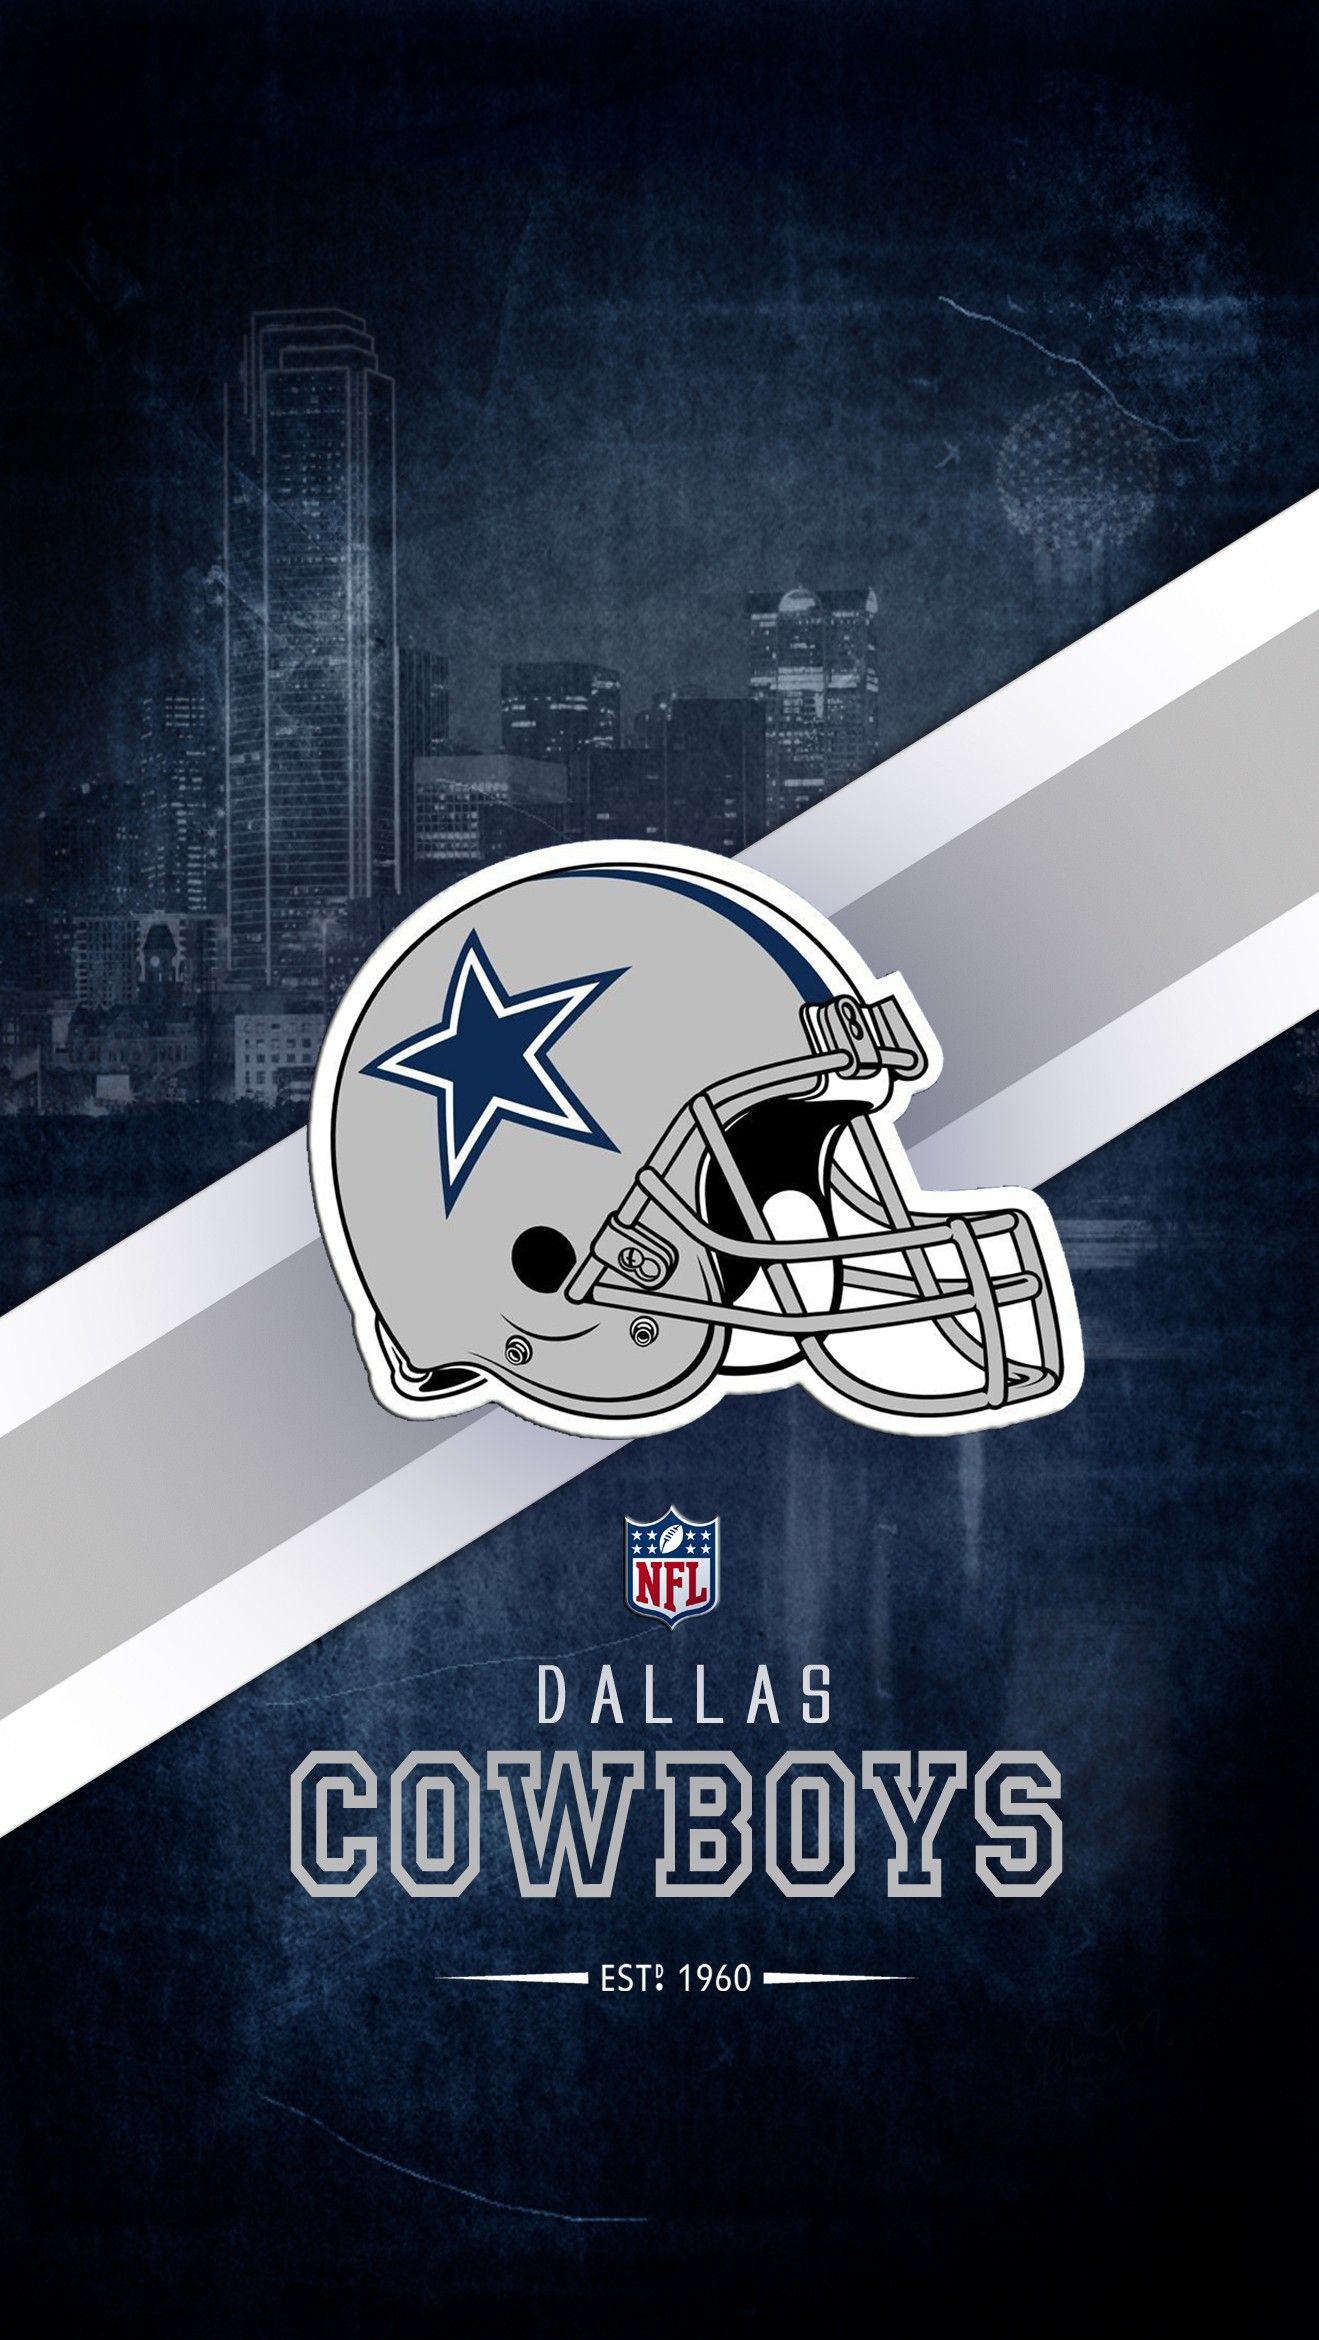 Cowboys wallpaper. Dallas cowboys wallpaper, Dallas cowboys, Cowboys